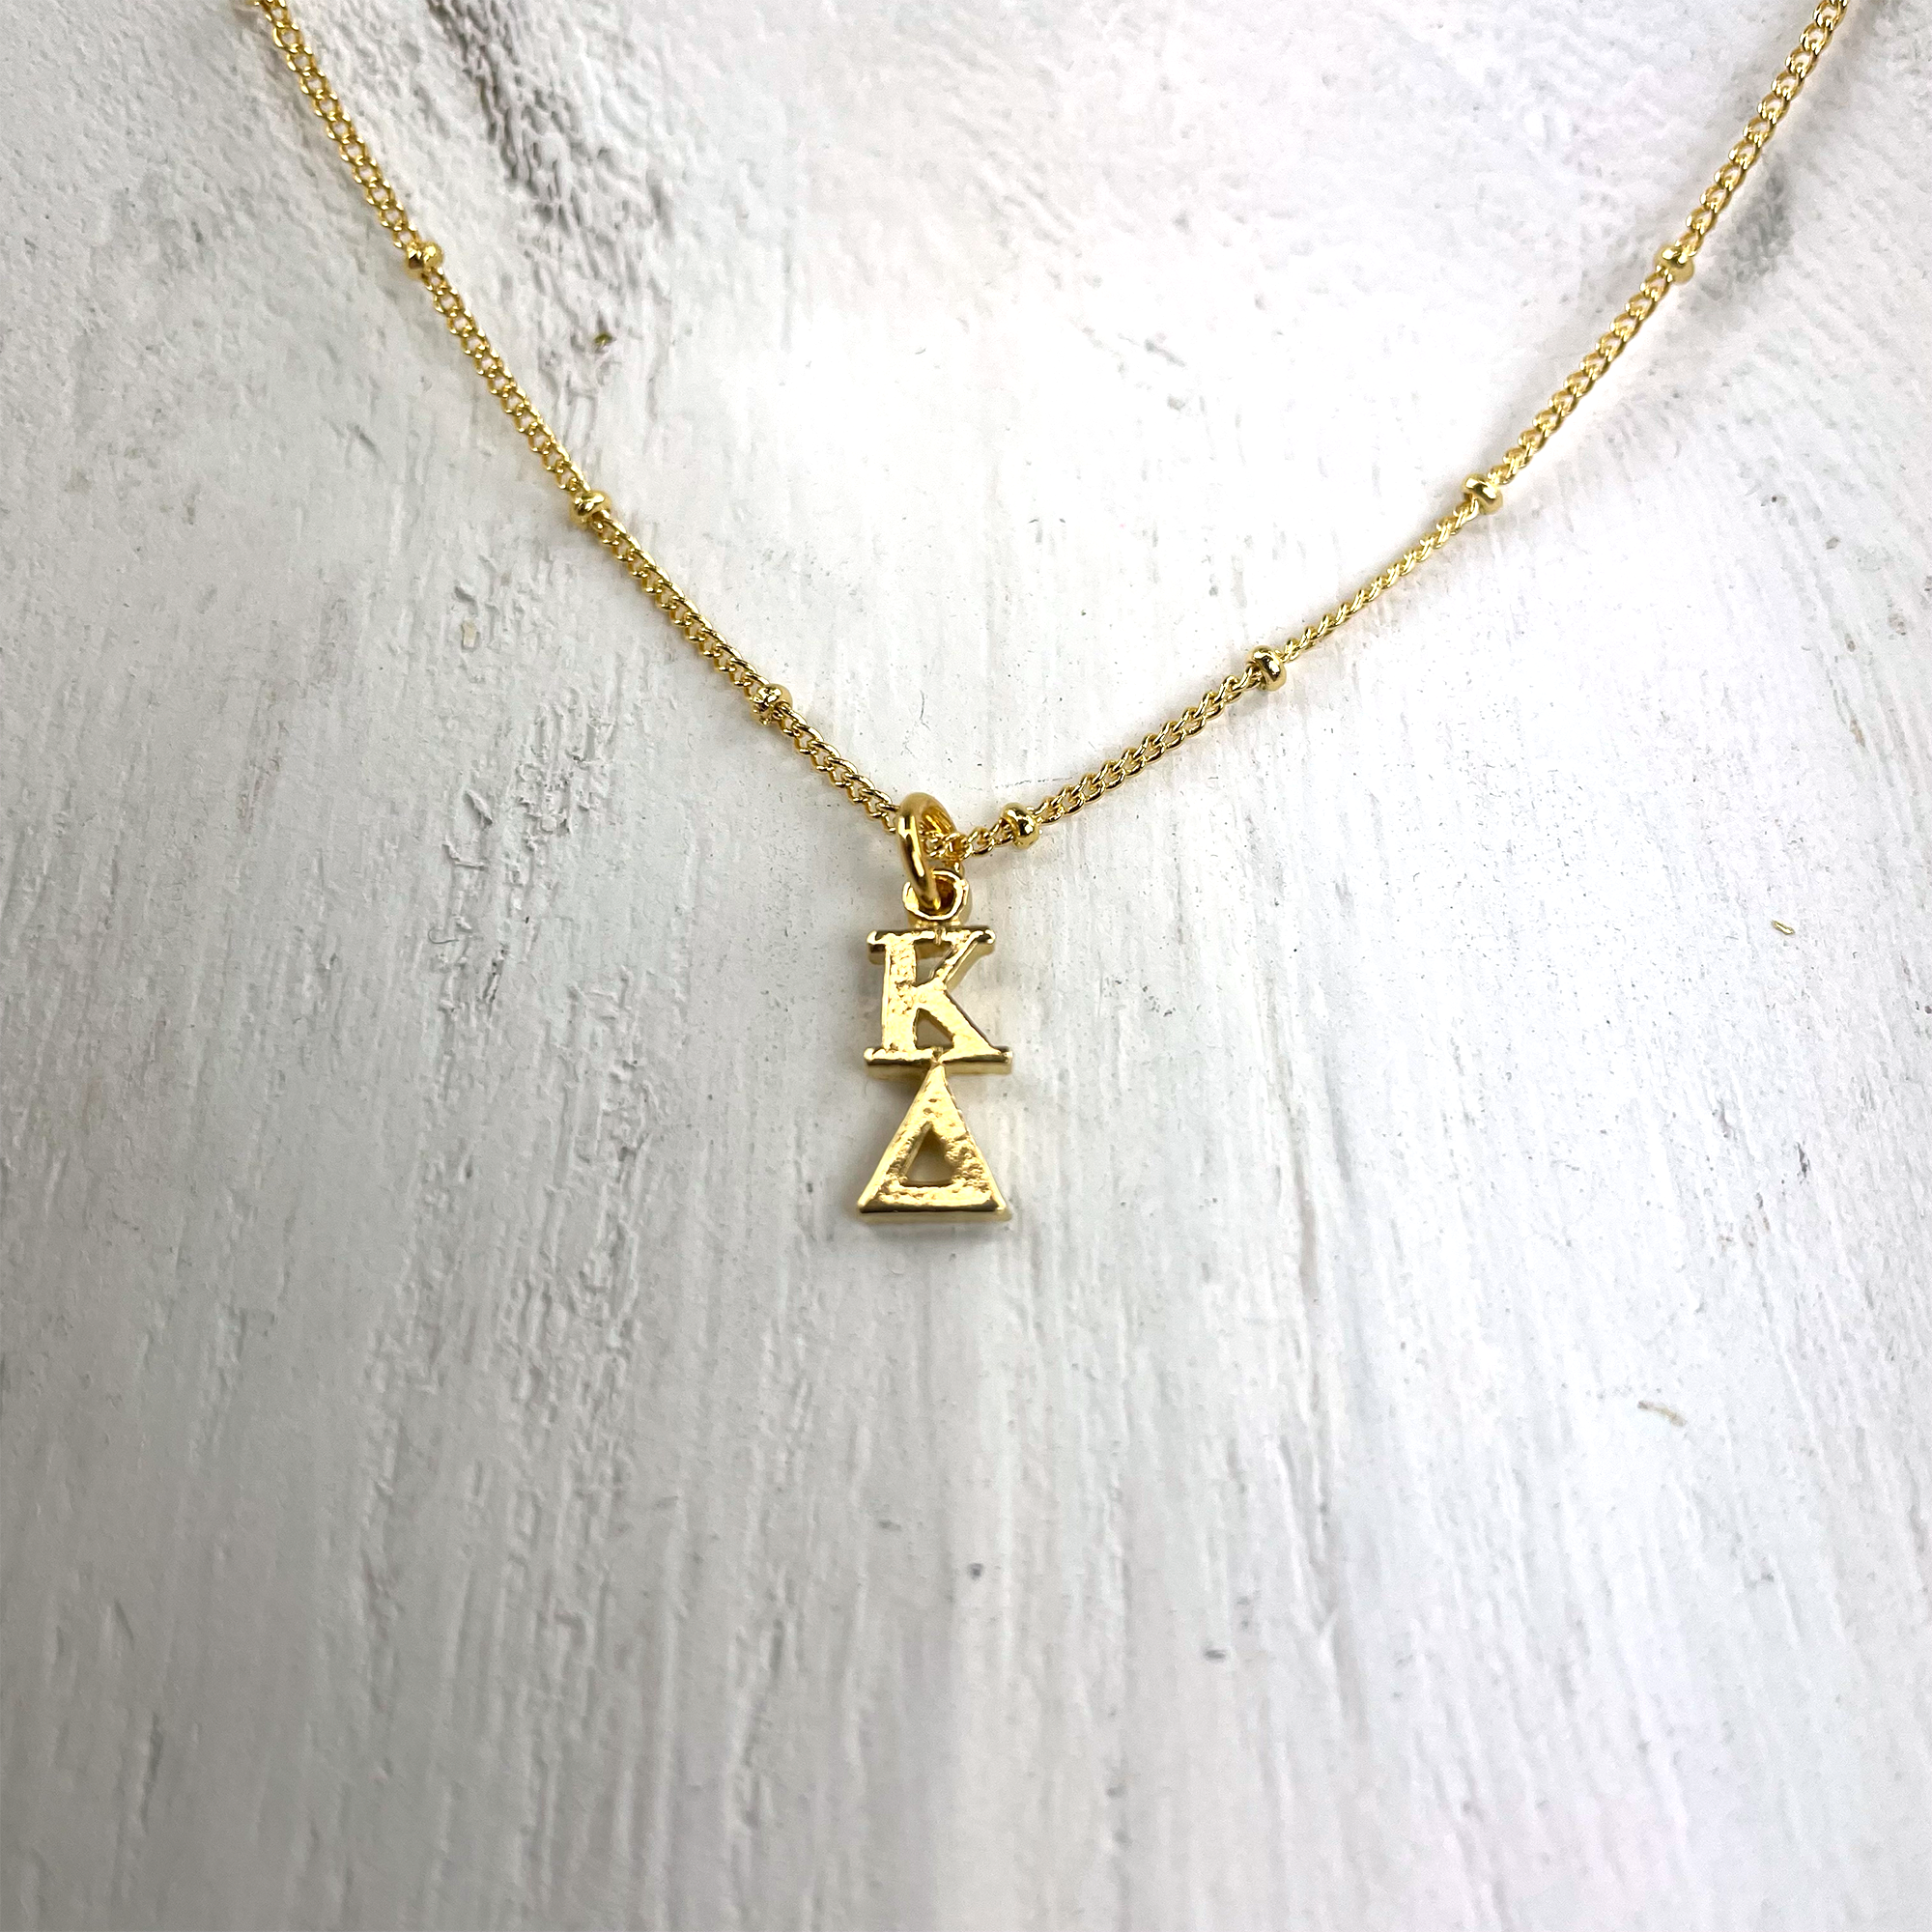 Kappa Delta Lavaliere Gold Necklace - Go Greek Chic